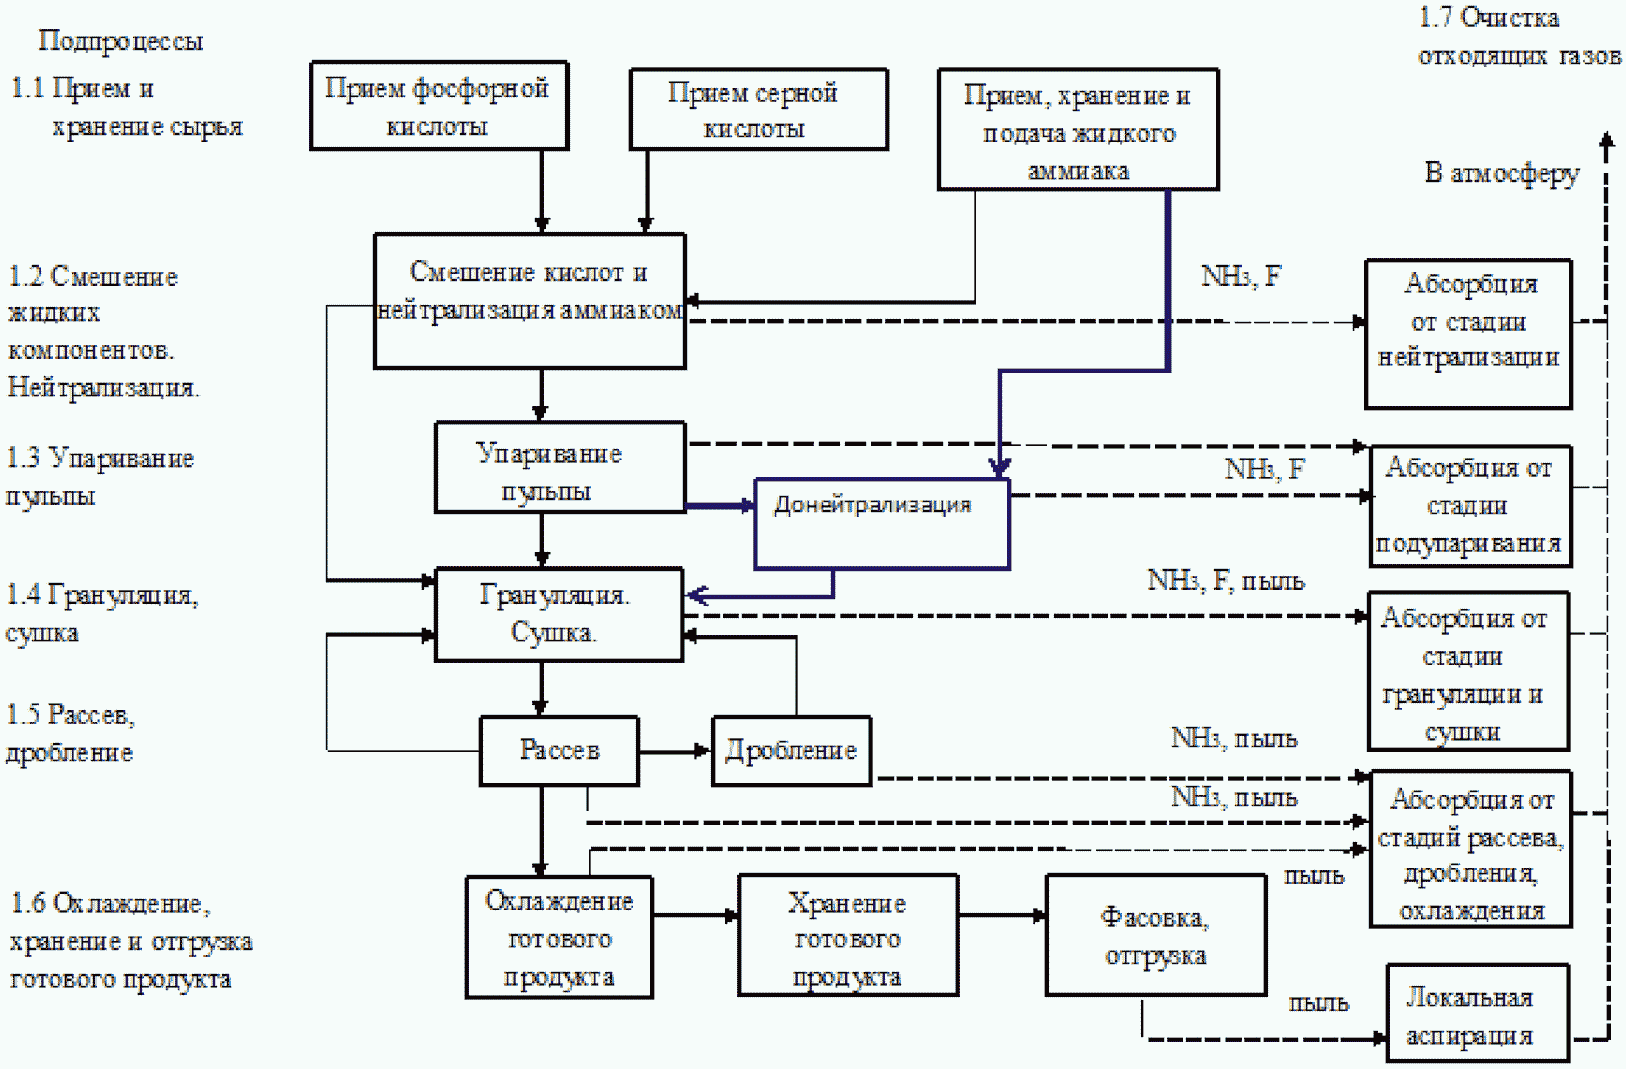 Диаграмма классов цеха по производству аммиака